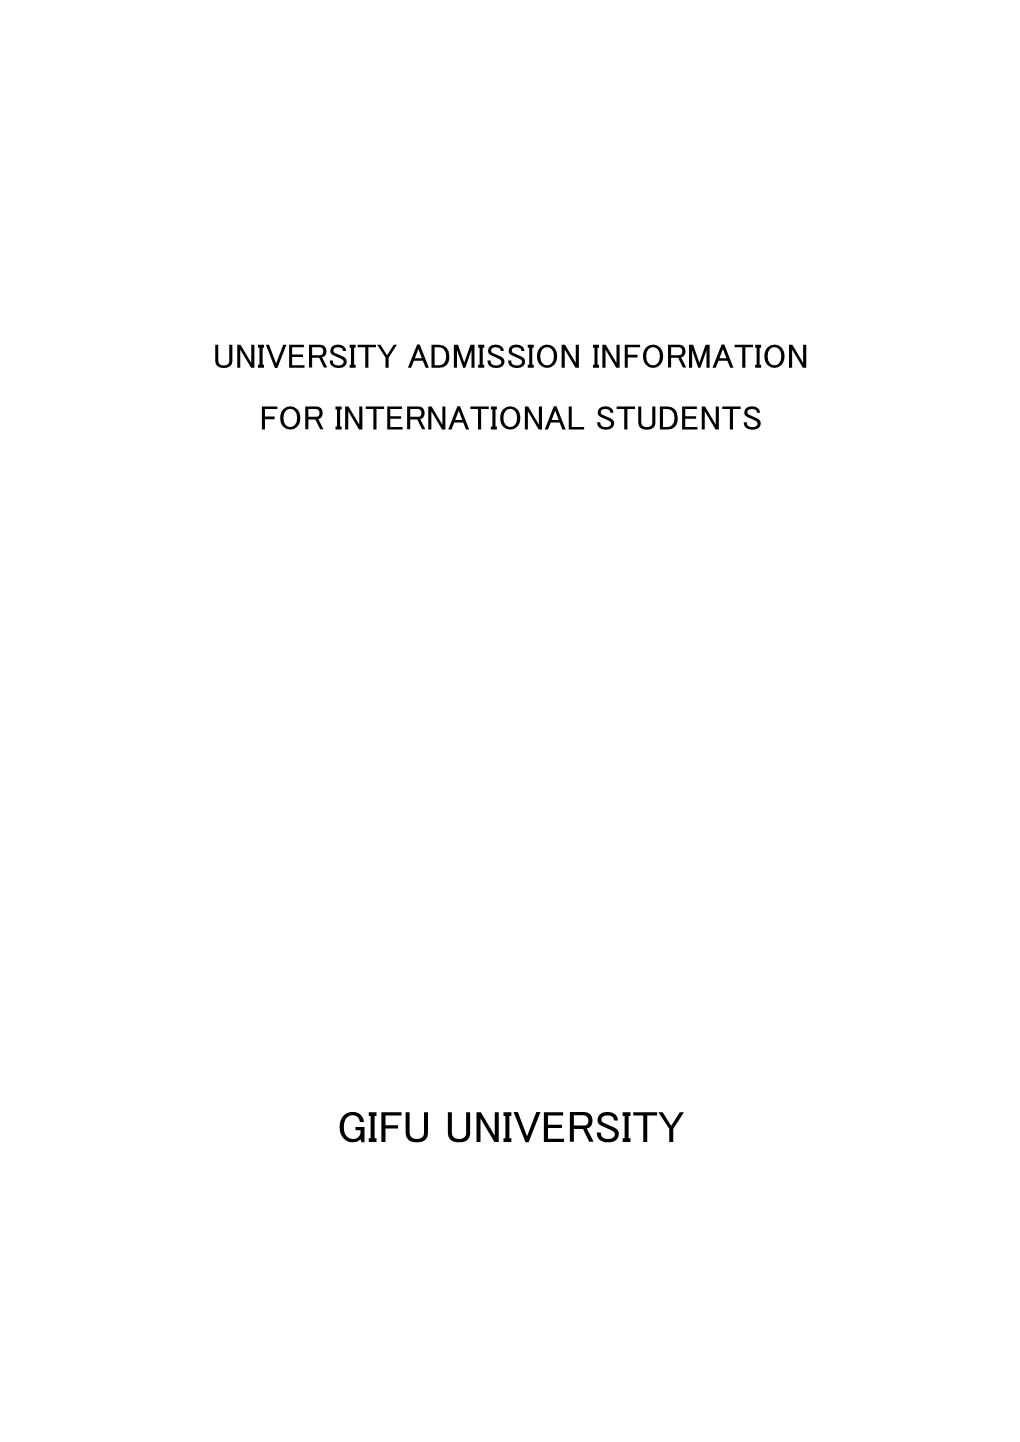 University Admission Information for International Students